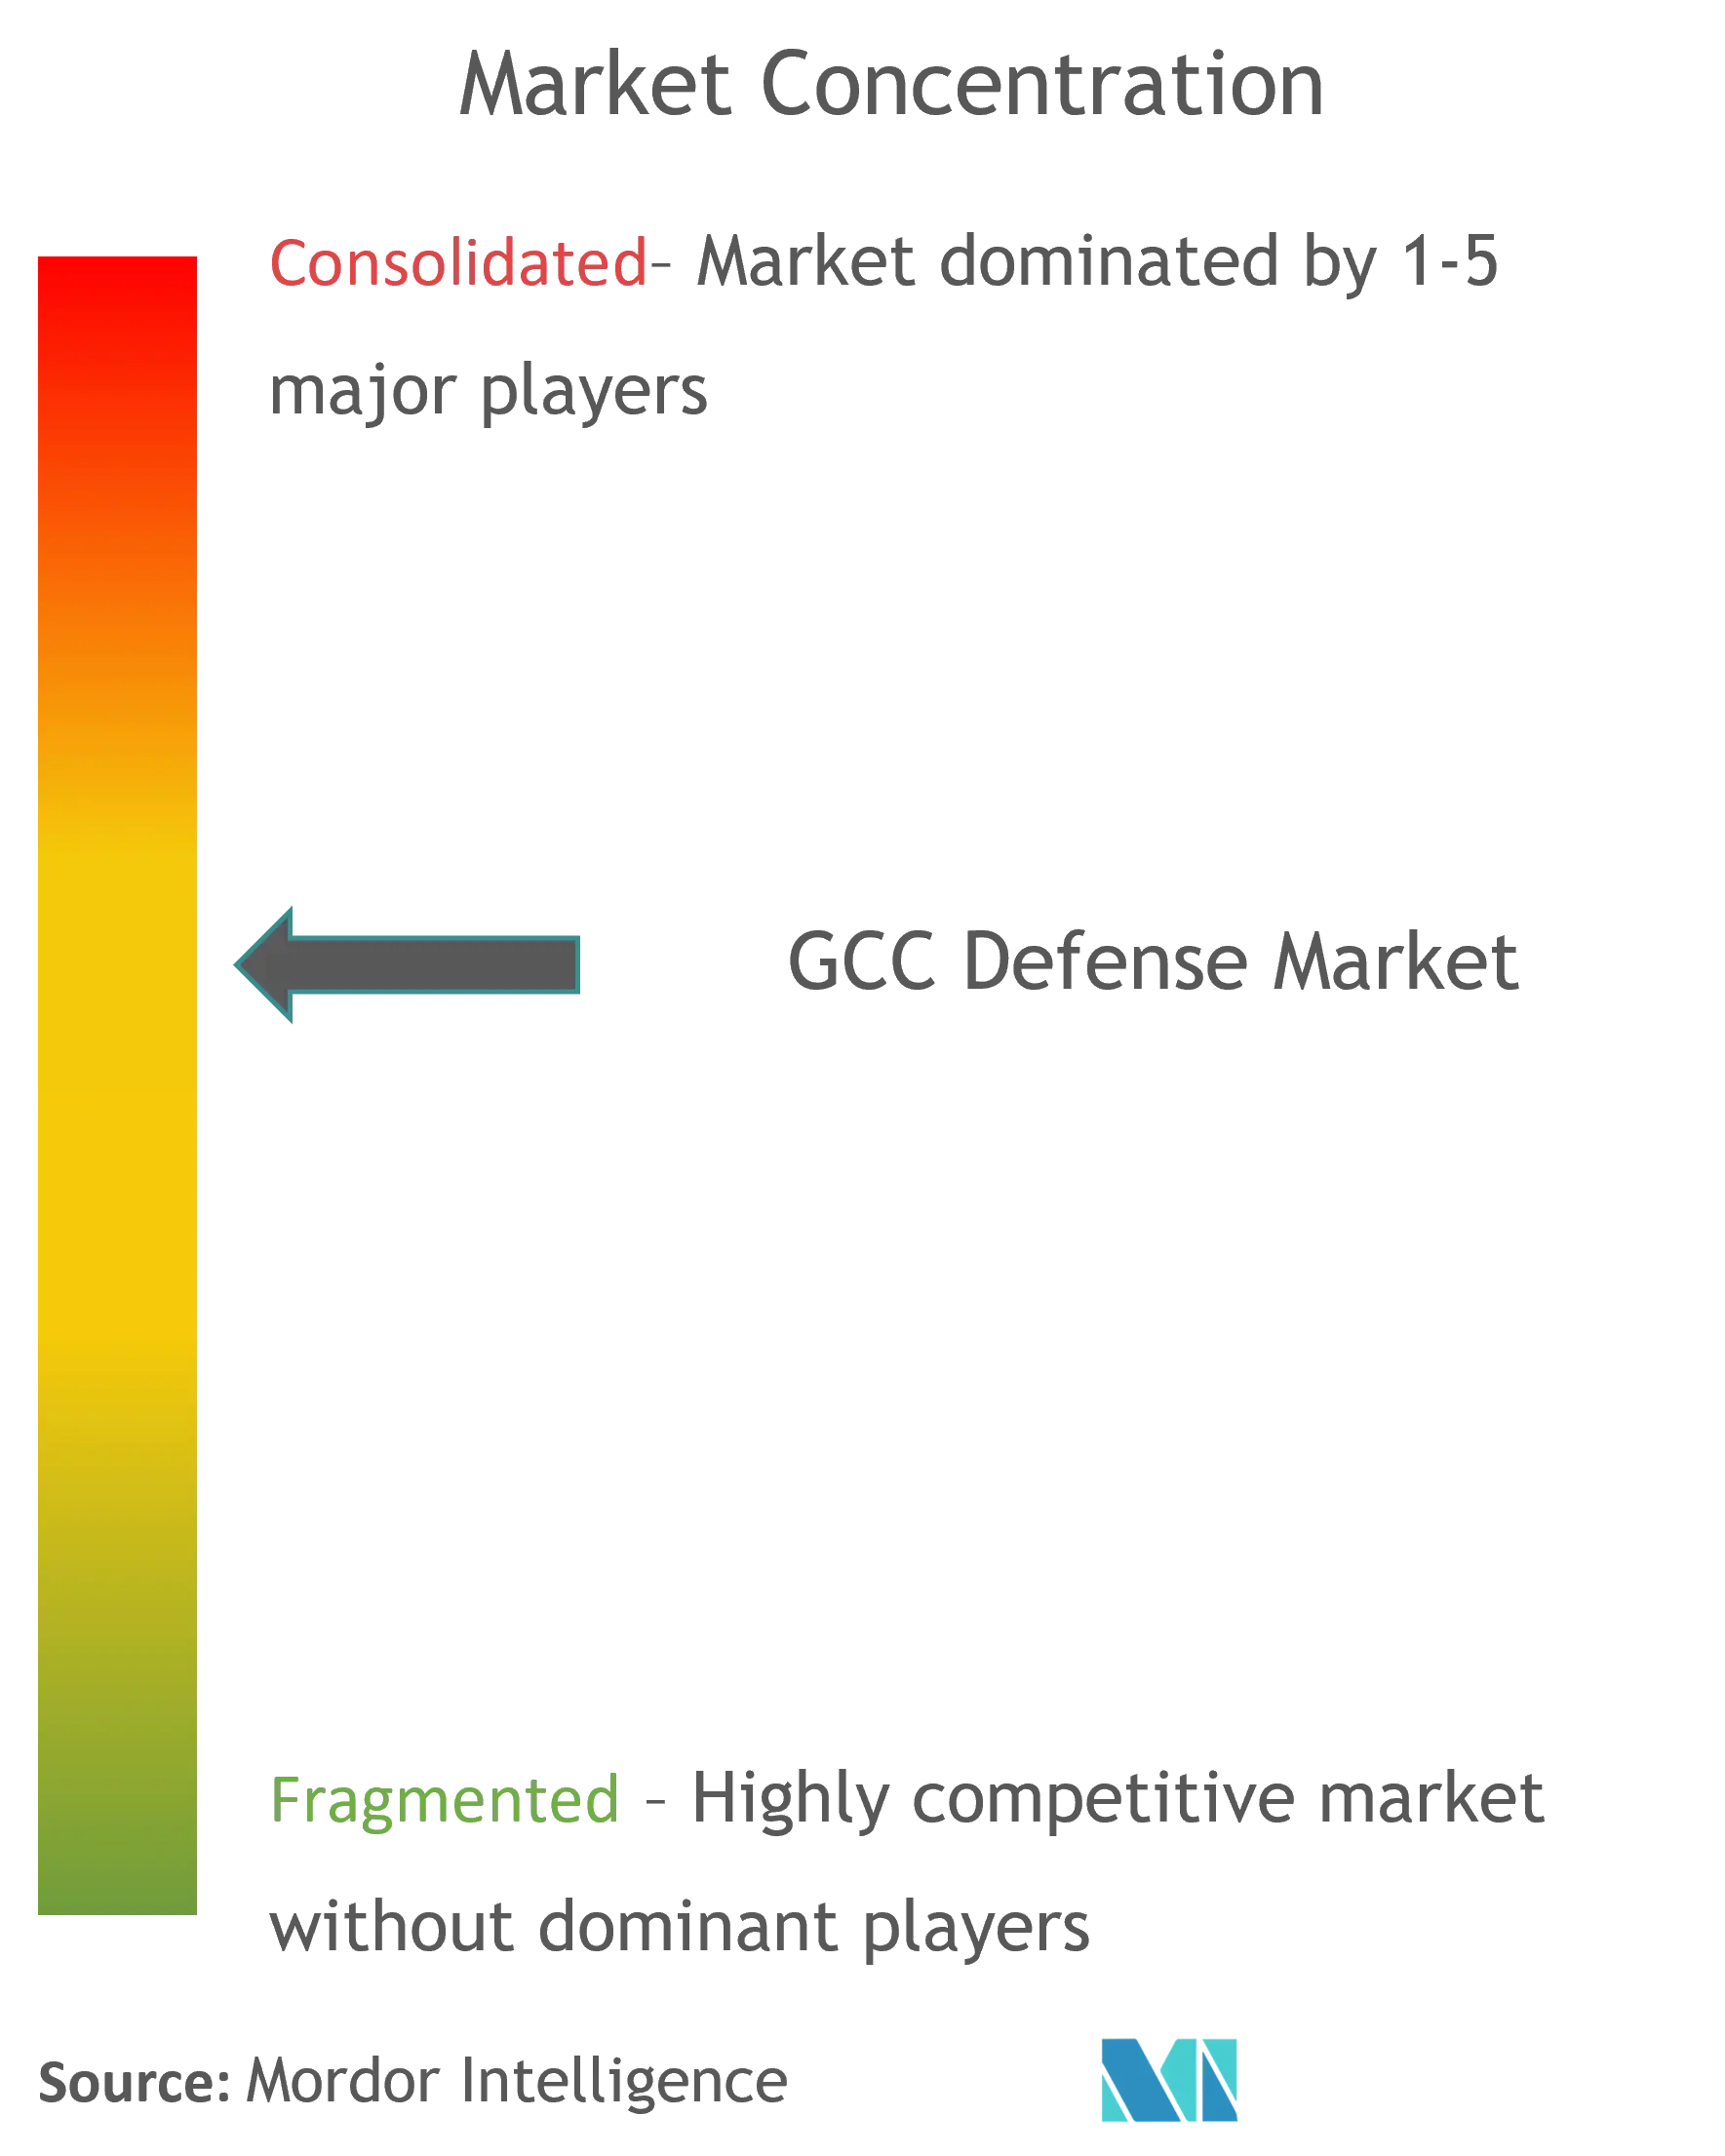 gcc defense market updated CL.png